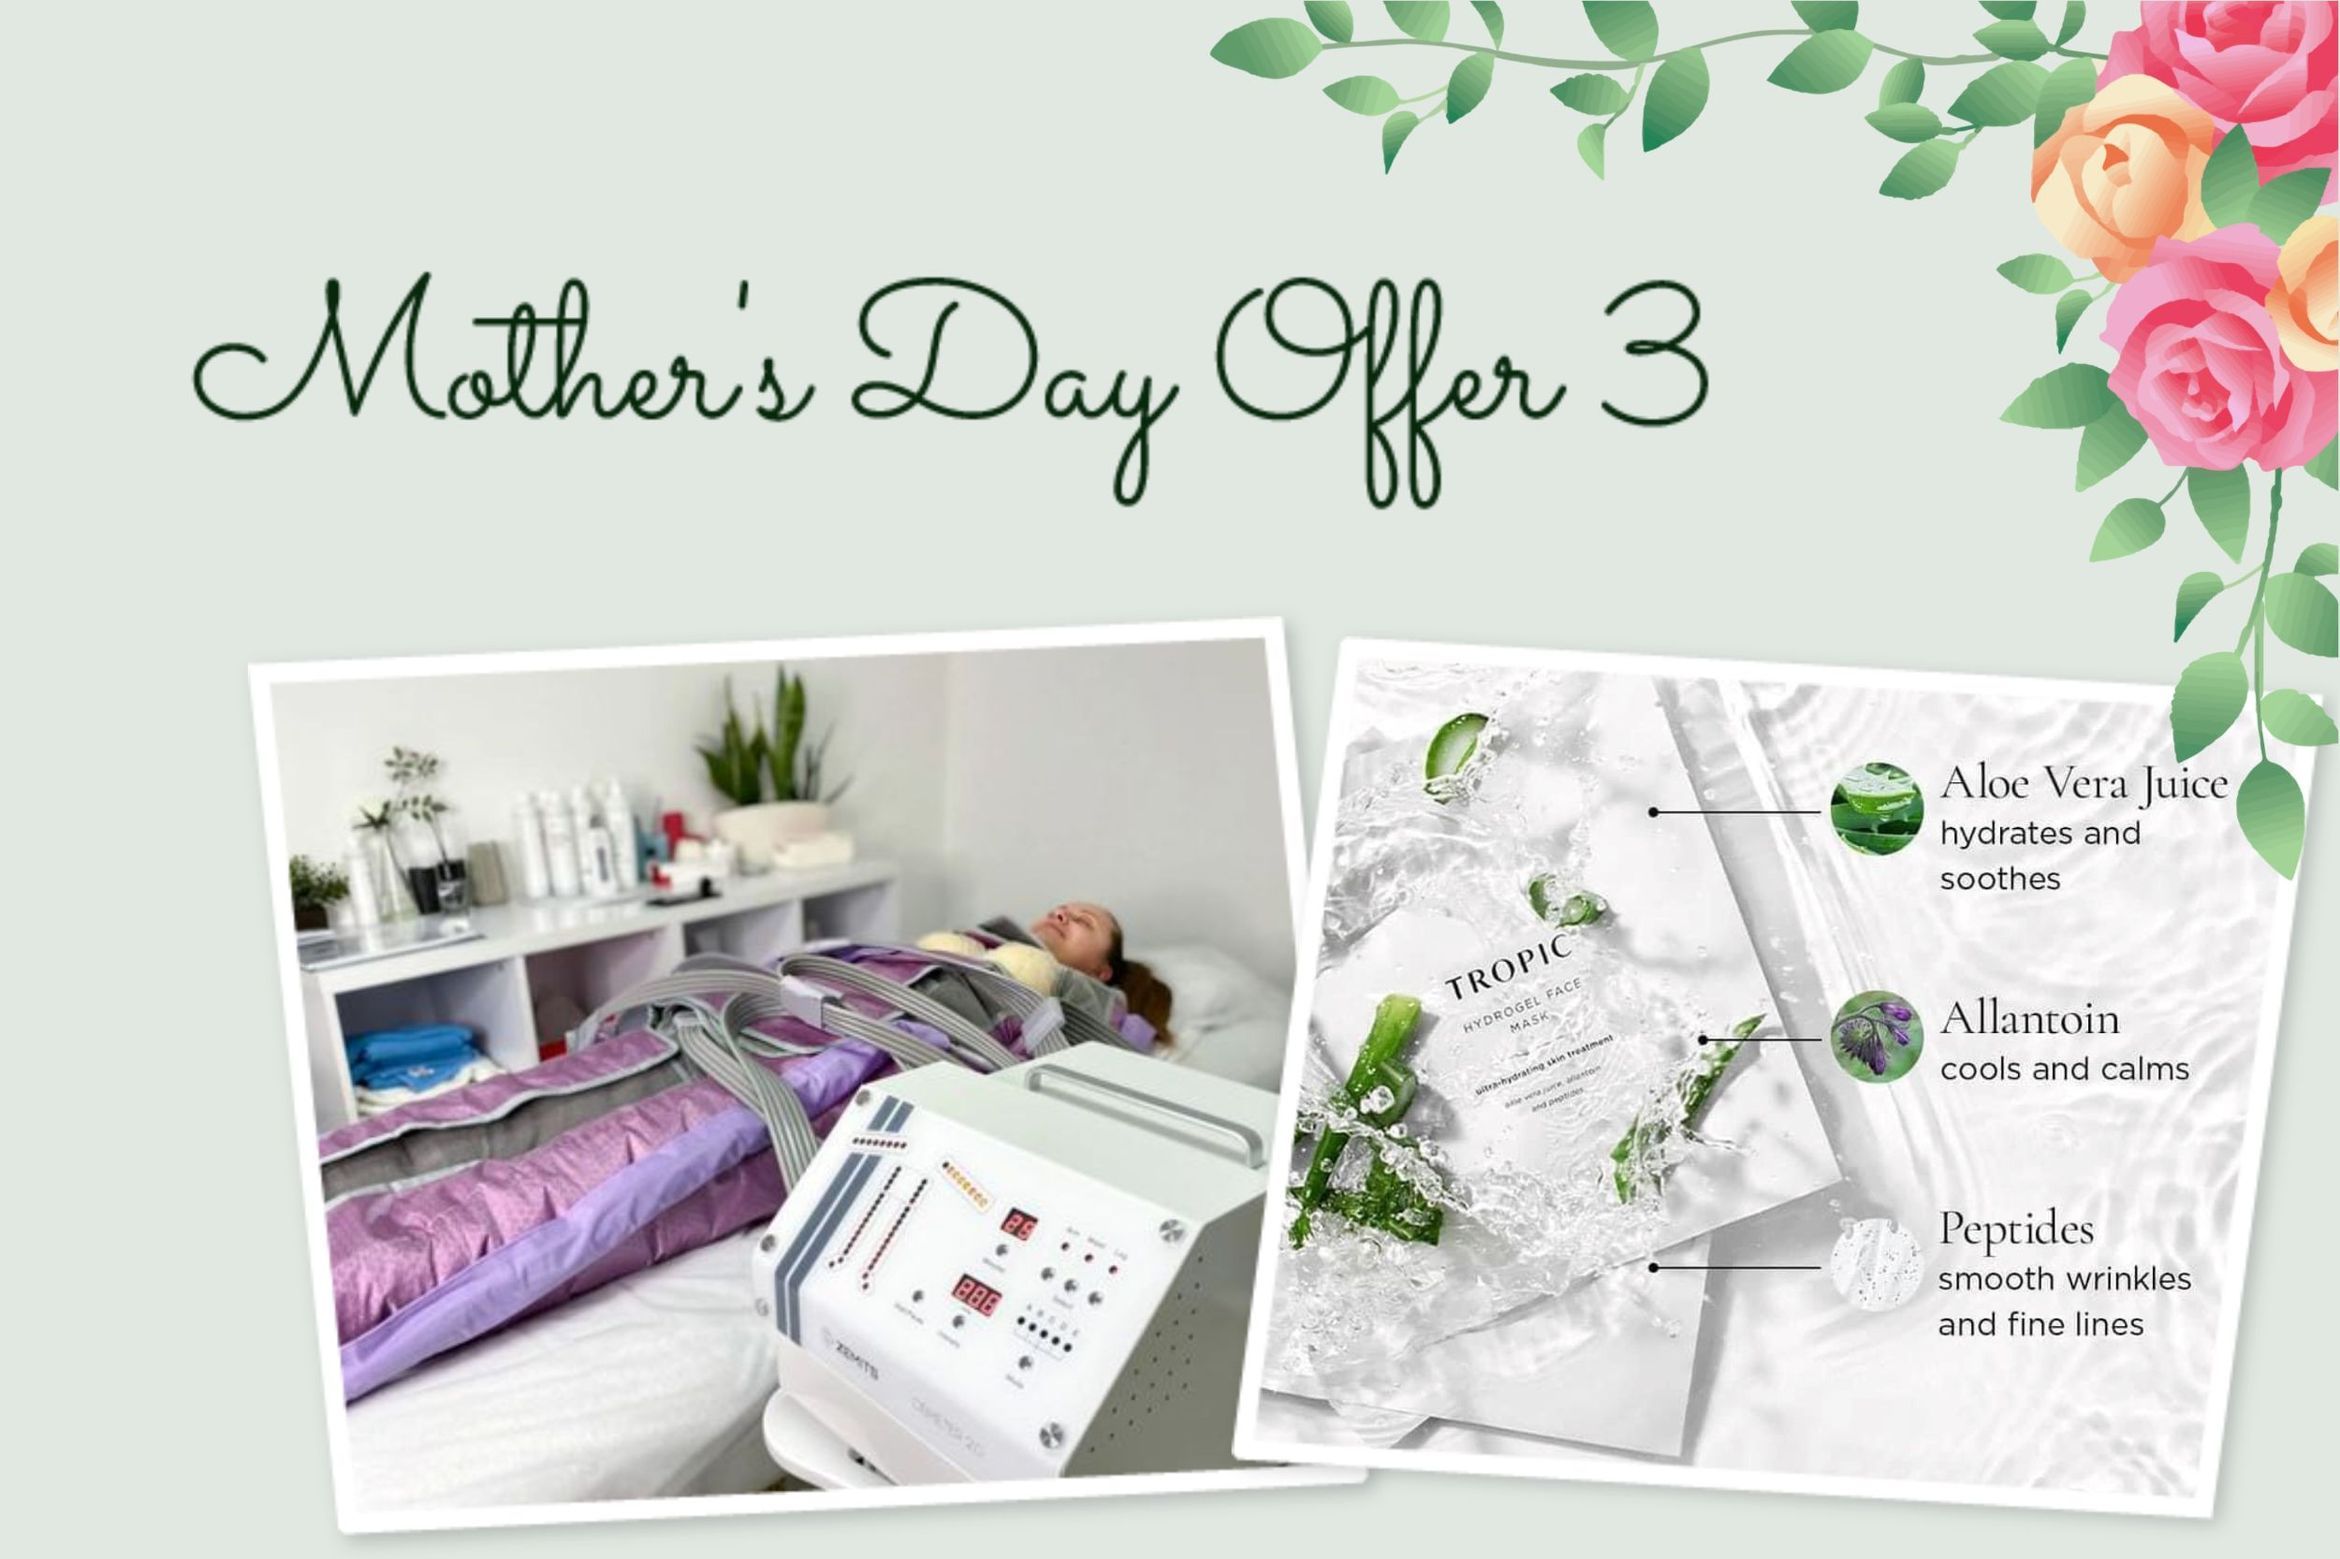 Mothers Day Offer 3 Pressotheraphy & Hydrogel Mask portfolio